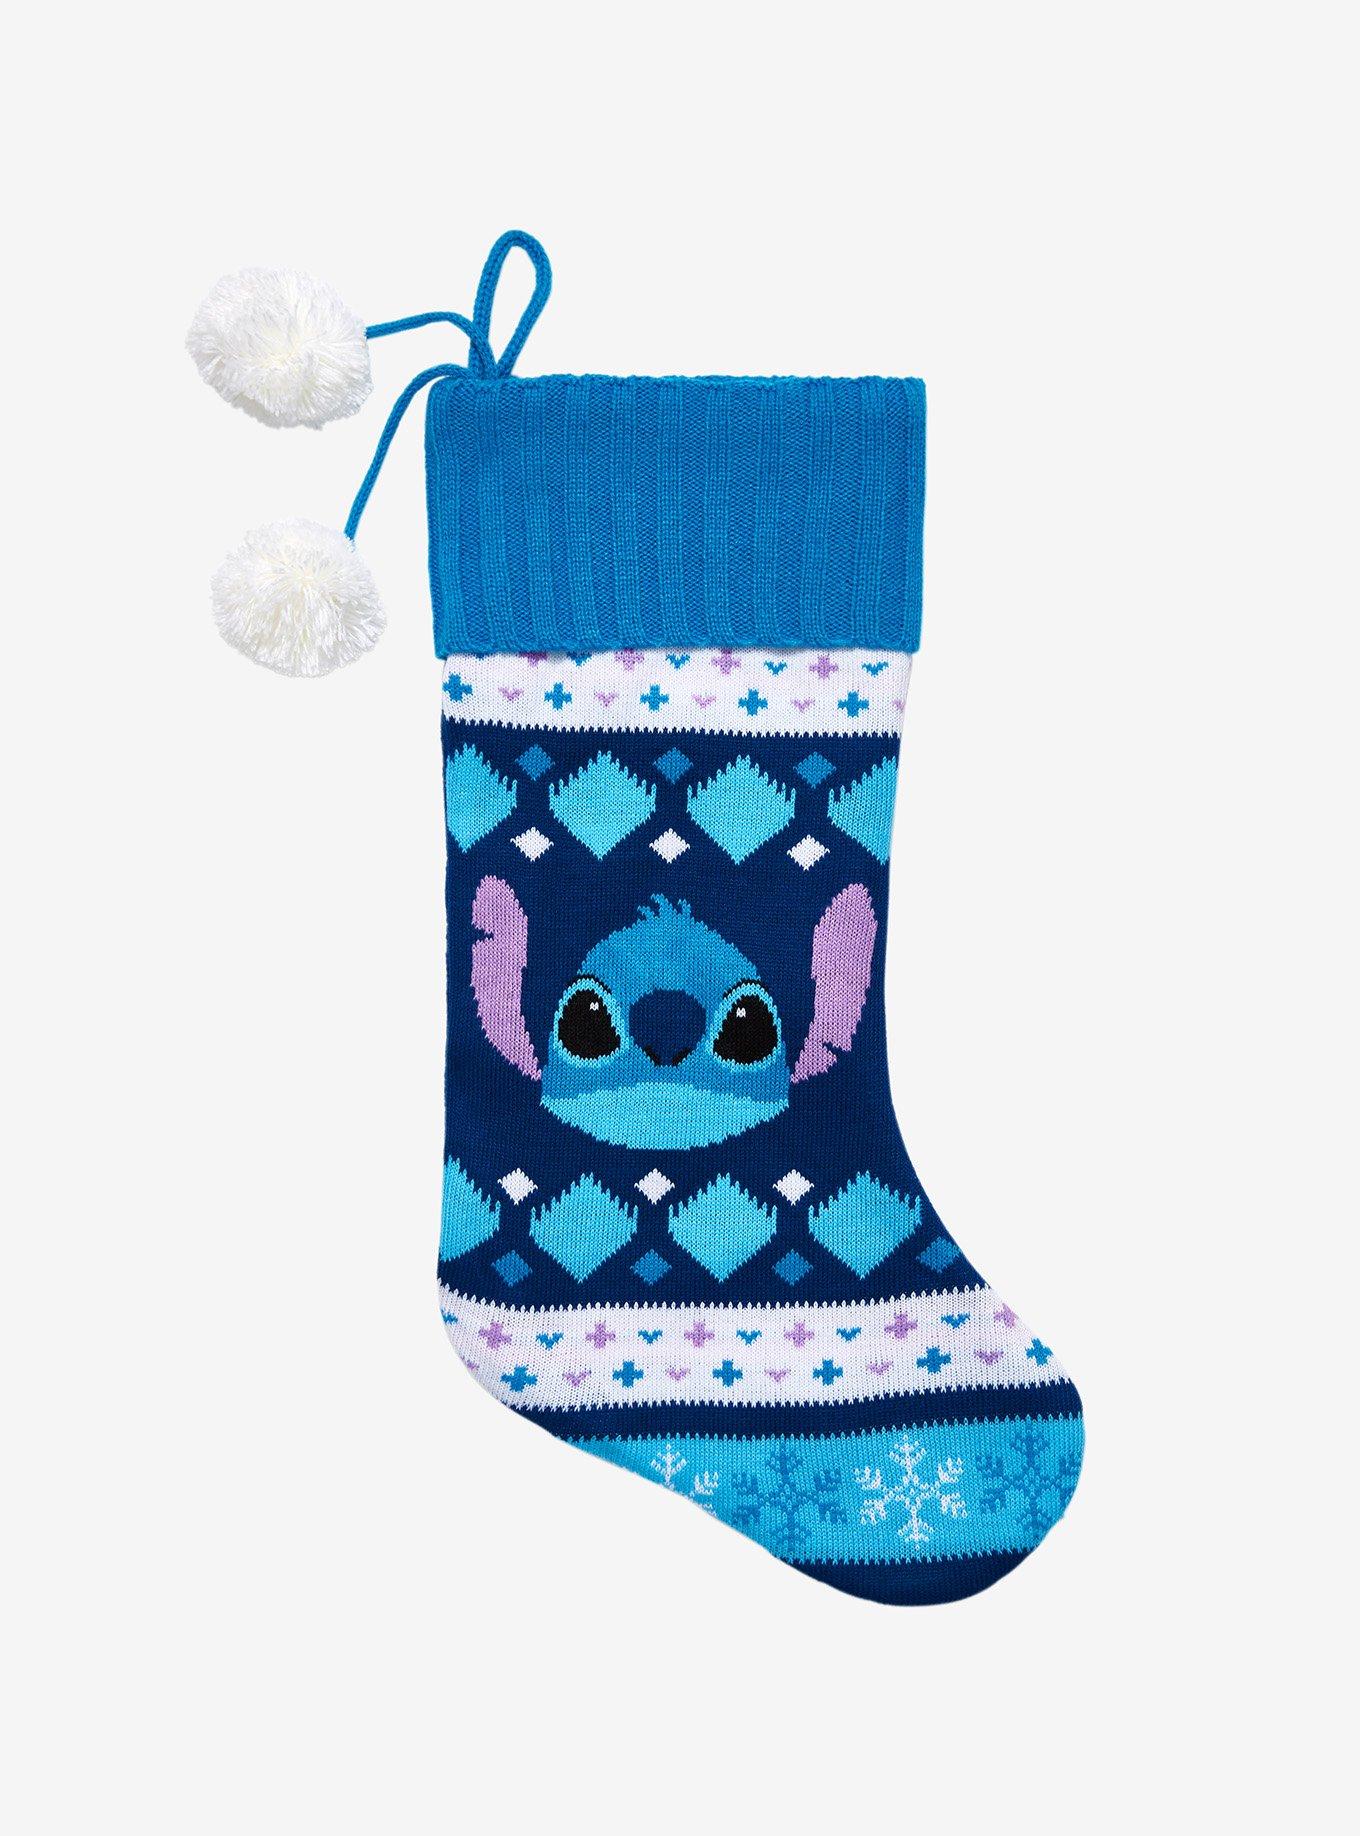 Disney Lilo & Stitch Fair Isle Knit Stocking Hot Topic Exclusive